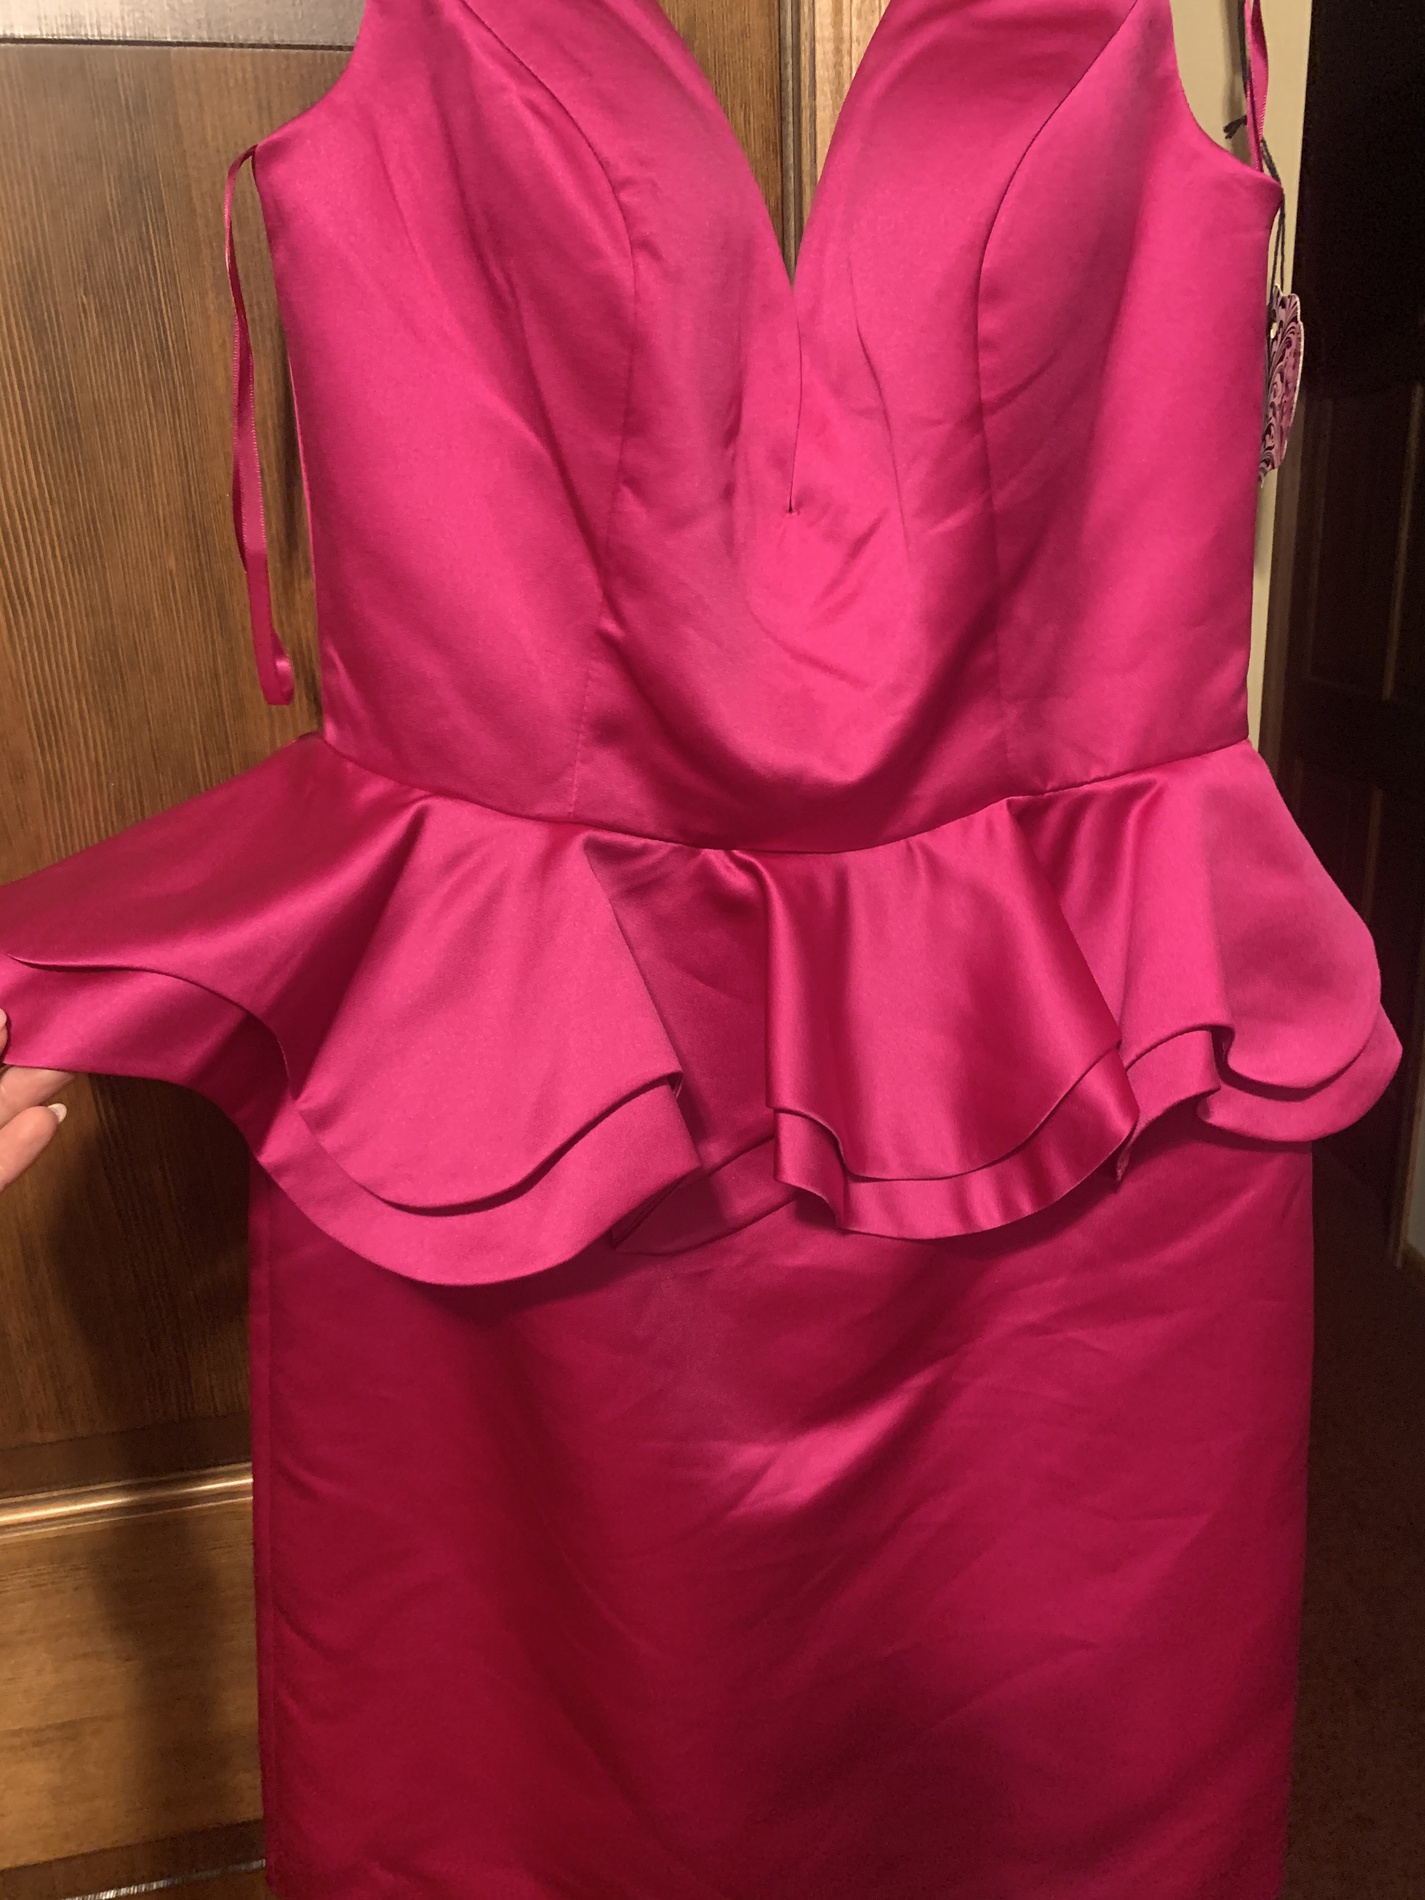 Ashley Lauren Size 8 Wedding Guest Plunge Satin Hot Pink Cocktail Dress on Queenly